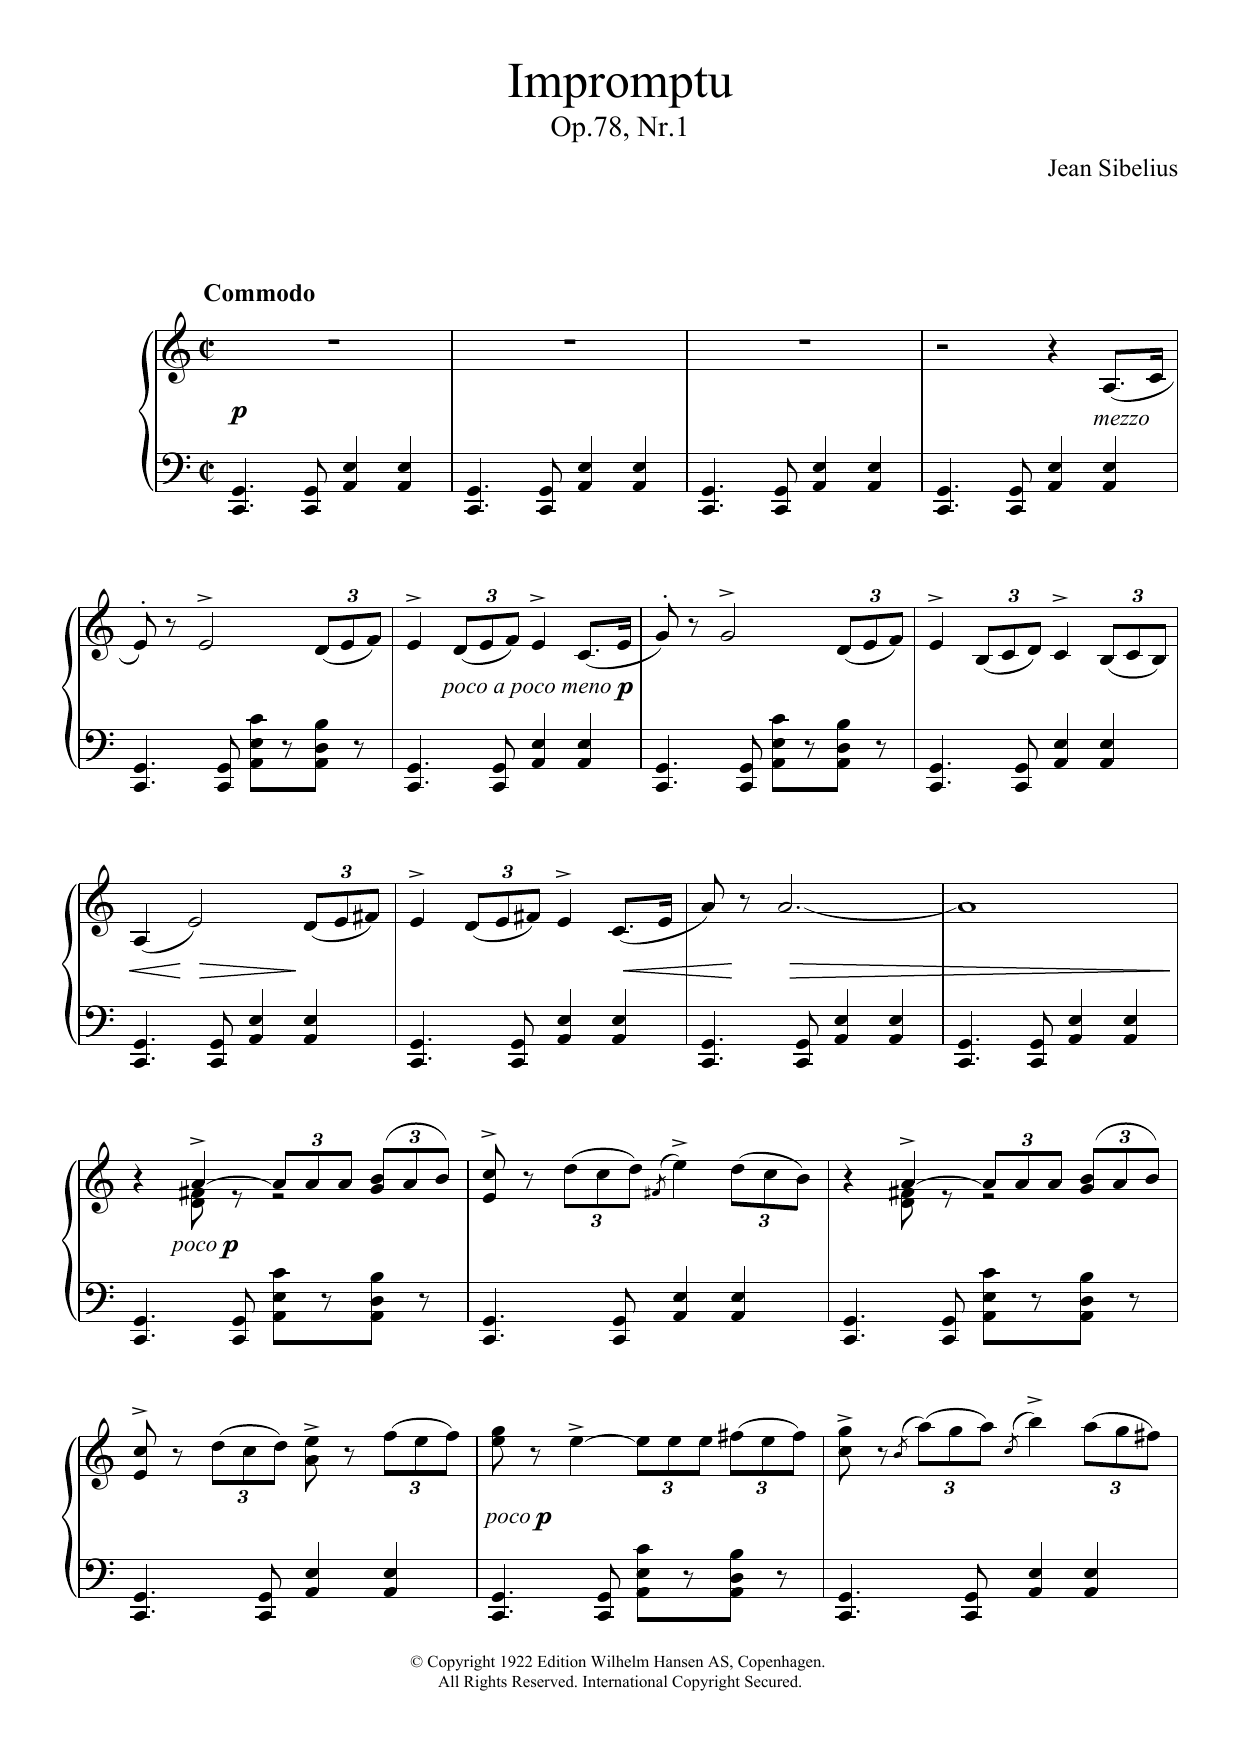 Jean Sibelius Impromptu, Op.78 No.1 Sheet Music Notes & Chords for Piano - Download or Print PDF